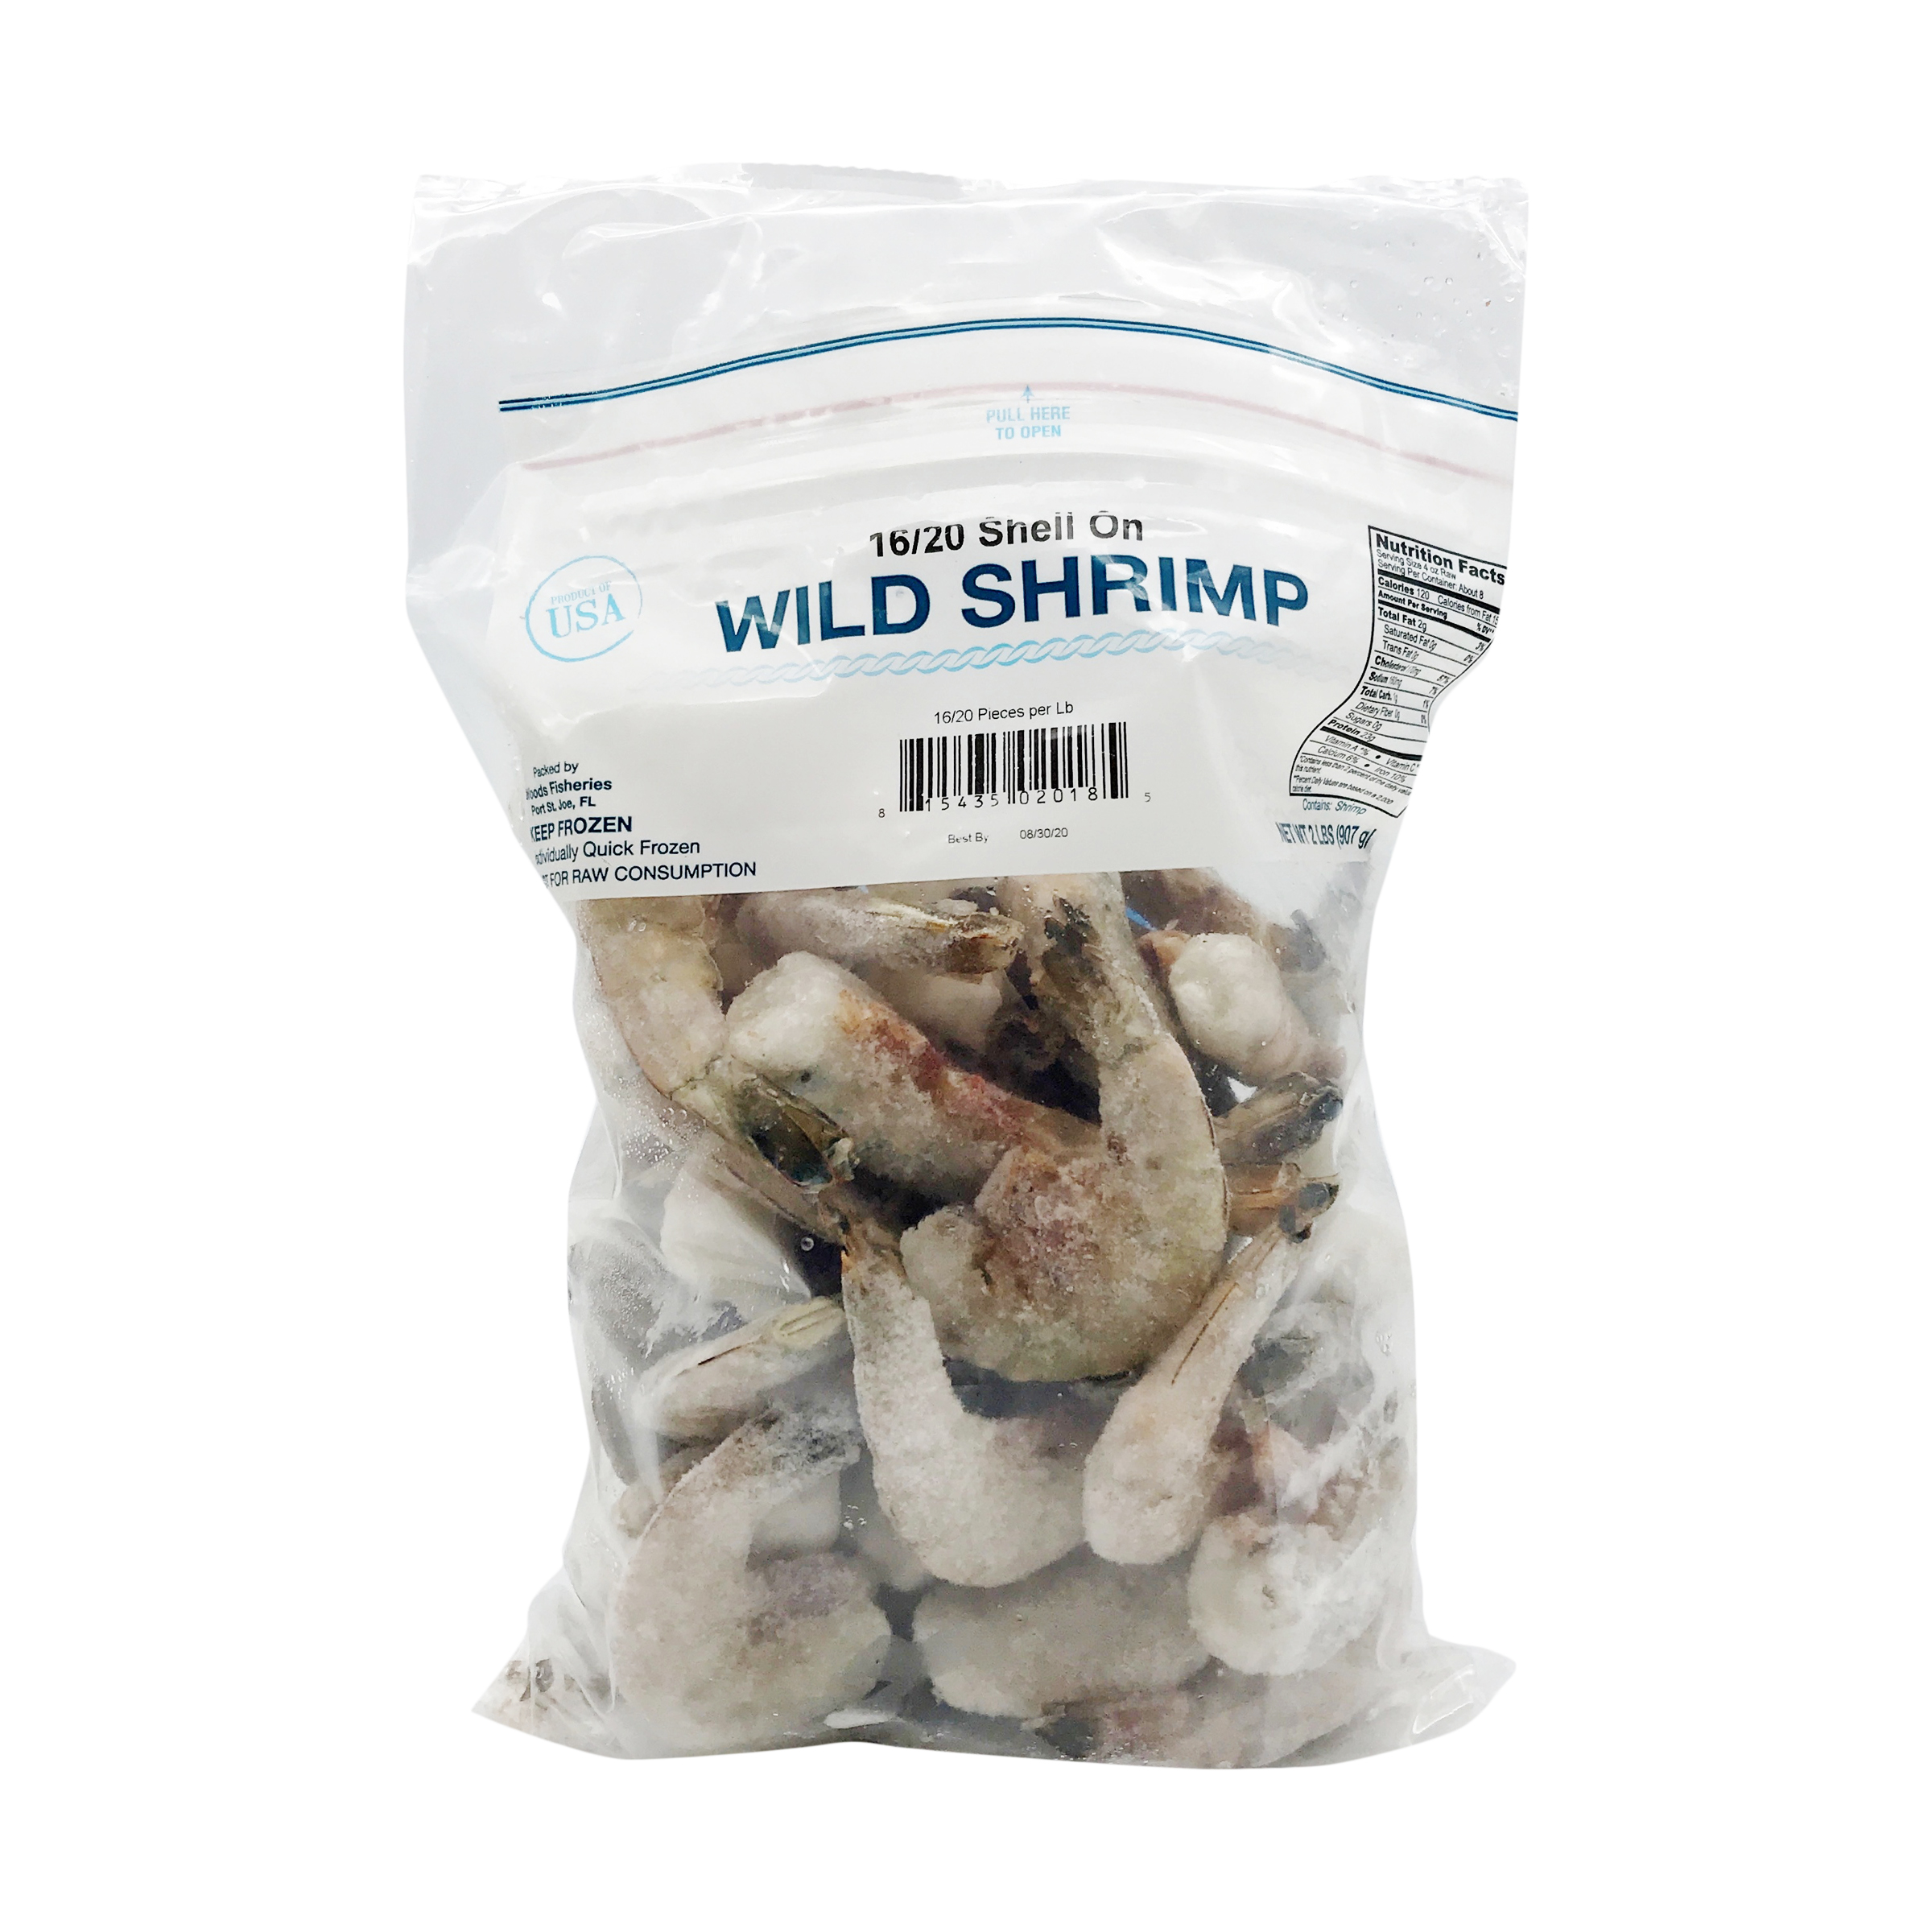 16 Shell On Wild Shrimp Raw Seafoods Inc Whole Foods Market